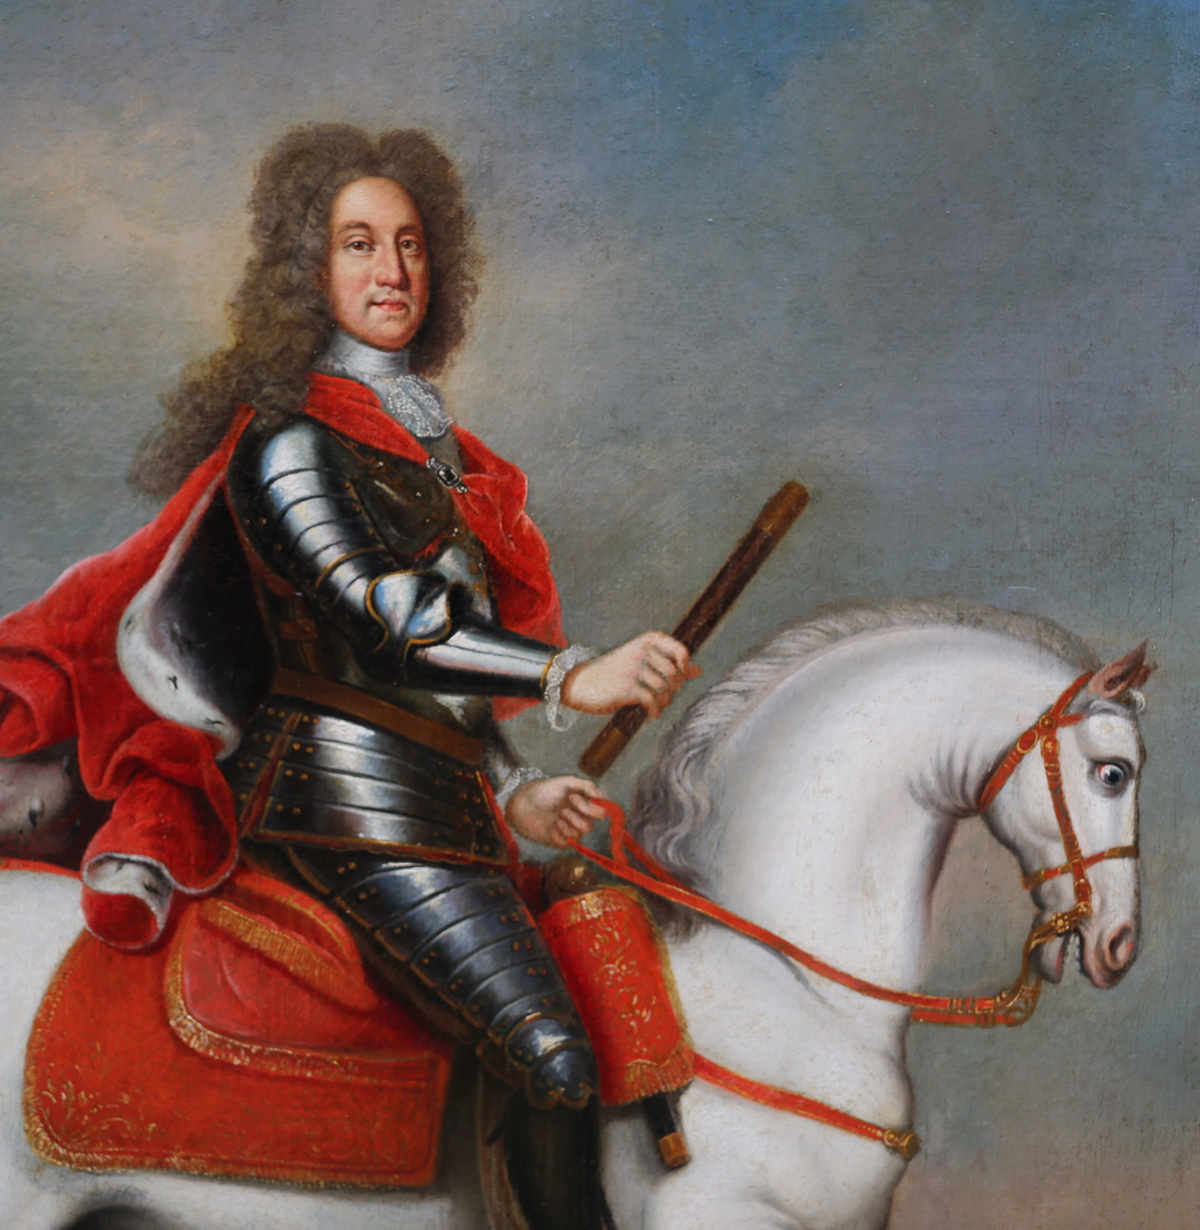 Adam Frans van der MEULEN 1632-1690 awarded